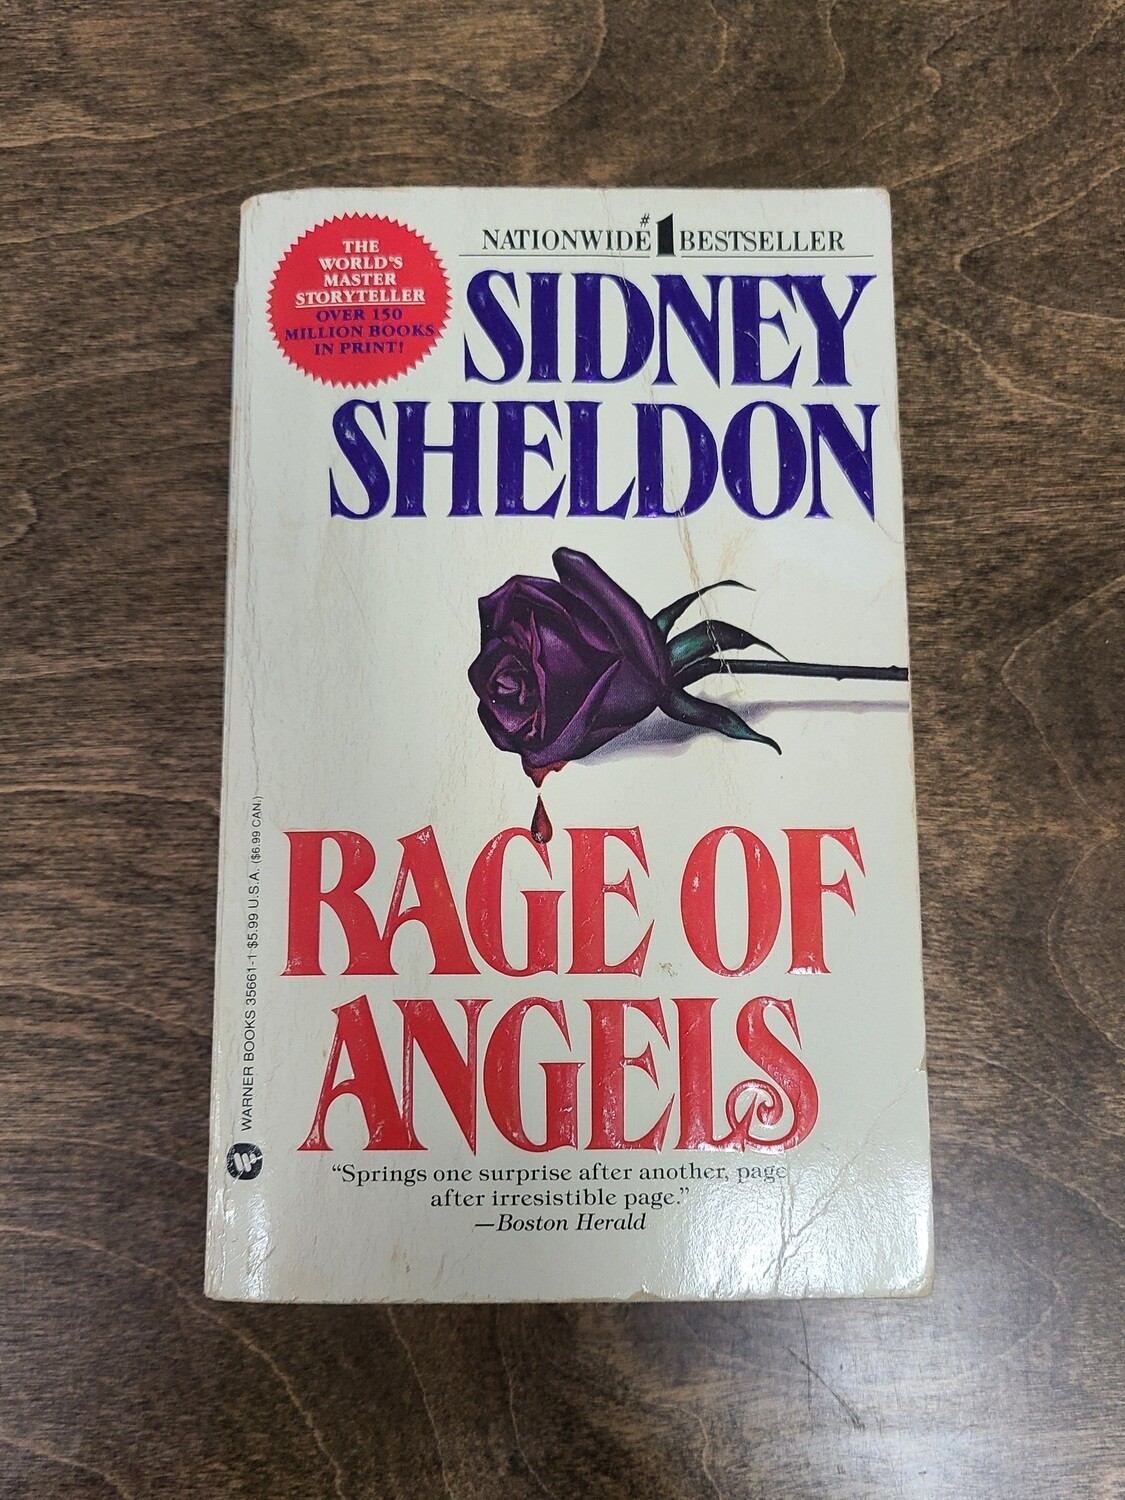 Rage of Angels by Sidney Sheldon